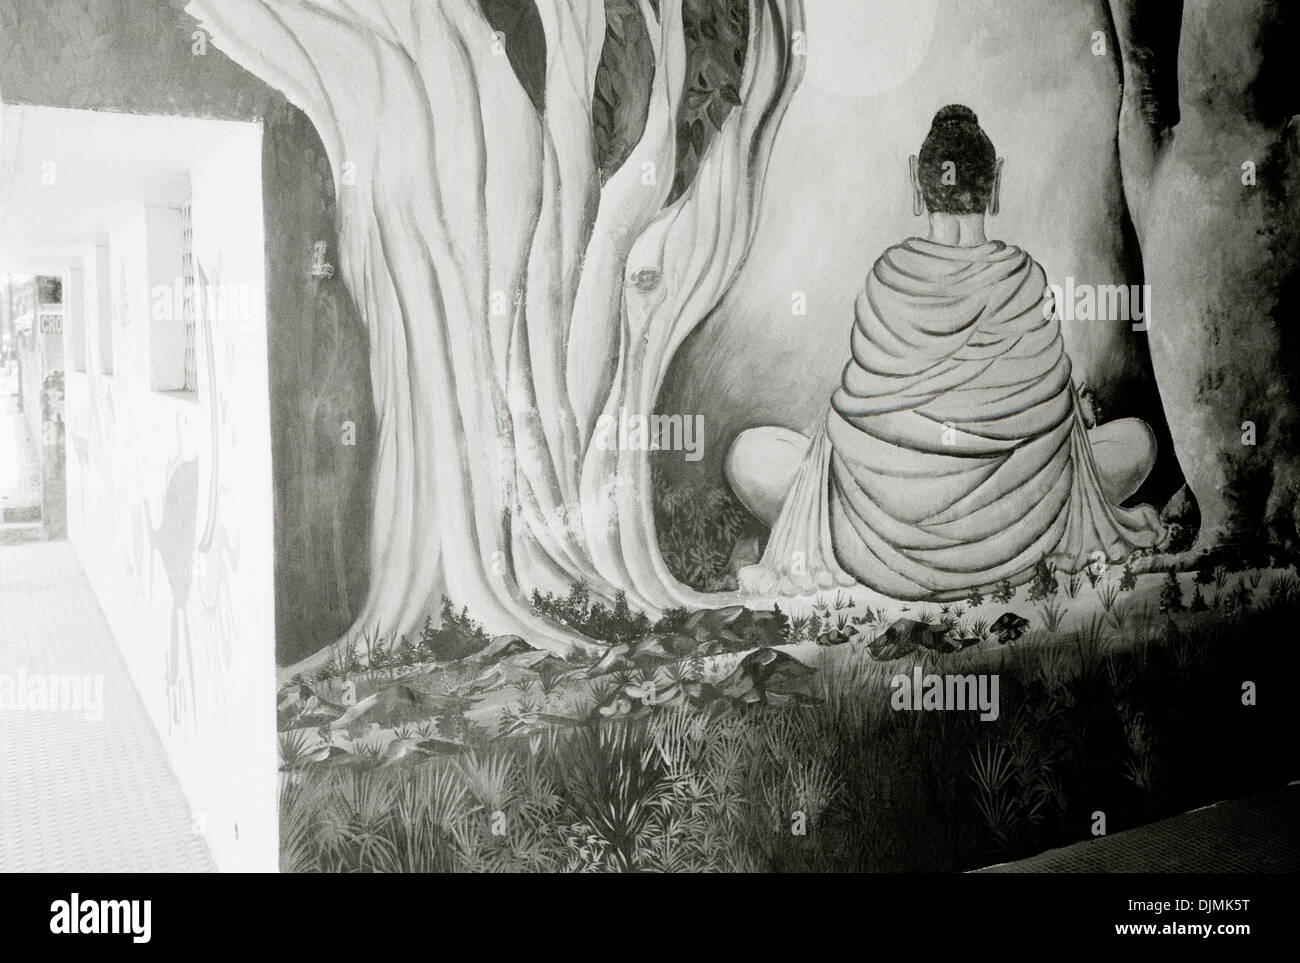 Arte graffiti urbano budista en Fort Kochi Cochin en Kerala en la India en el sur de Asia. Mindfulness Budismo trascendental cultura viaje surrealista Foto de stock